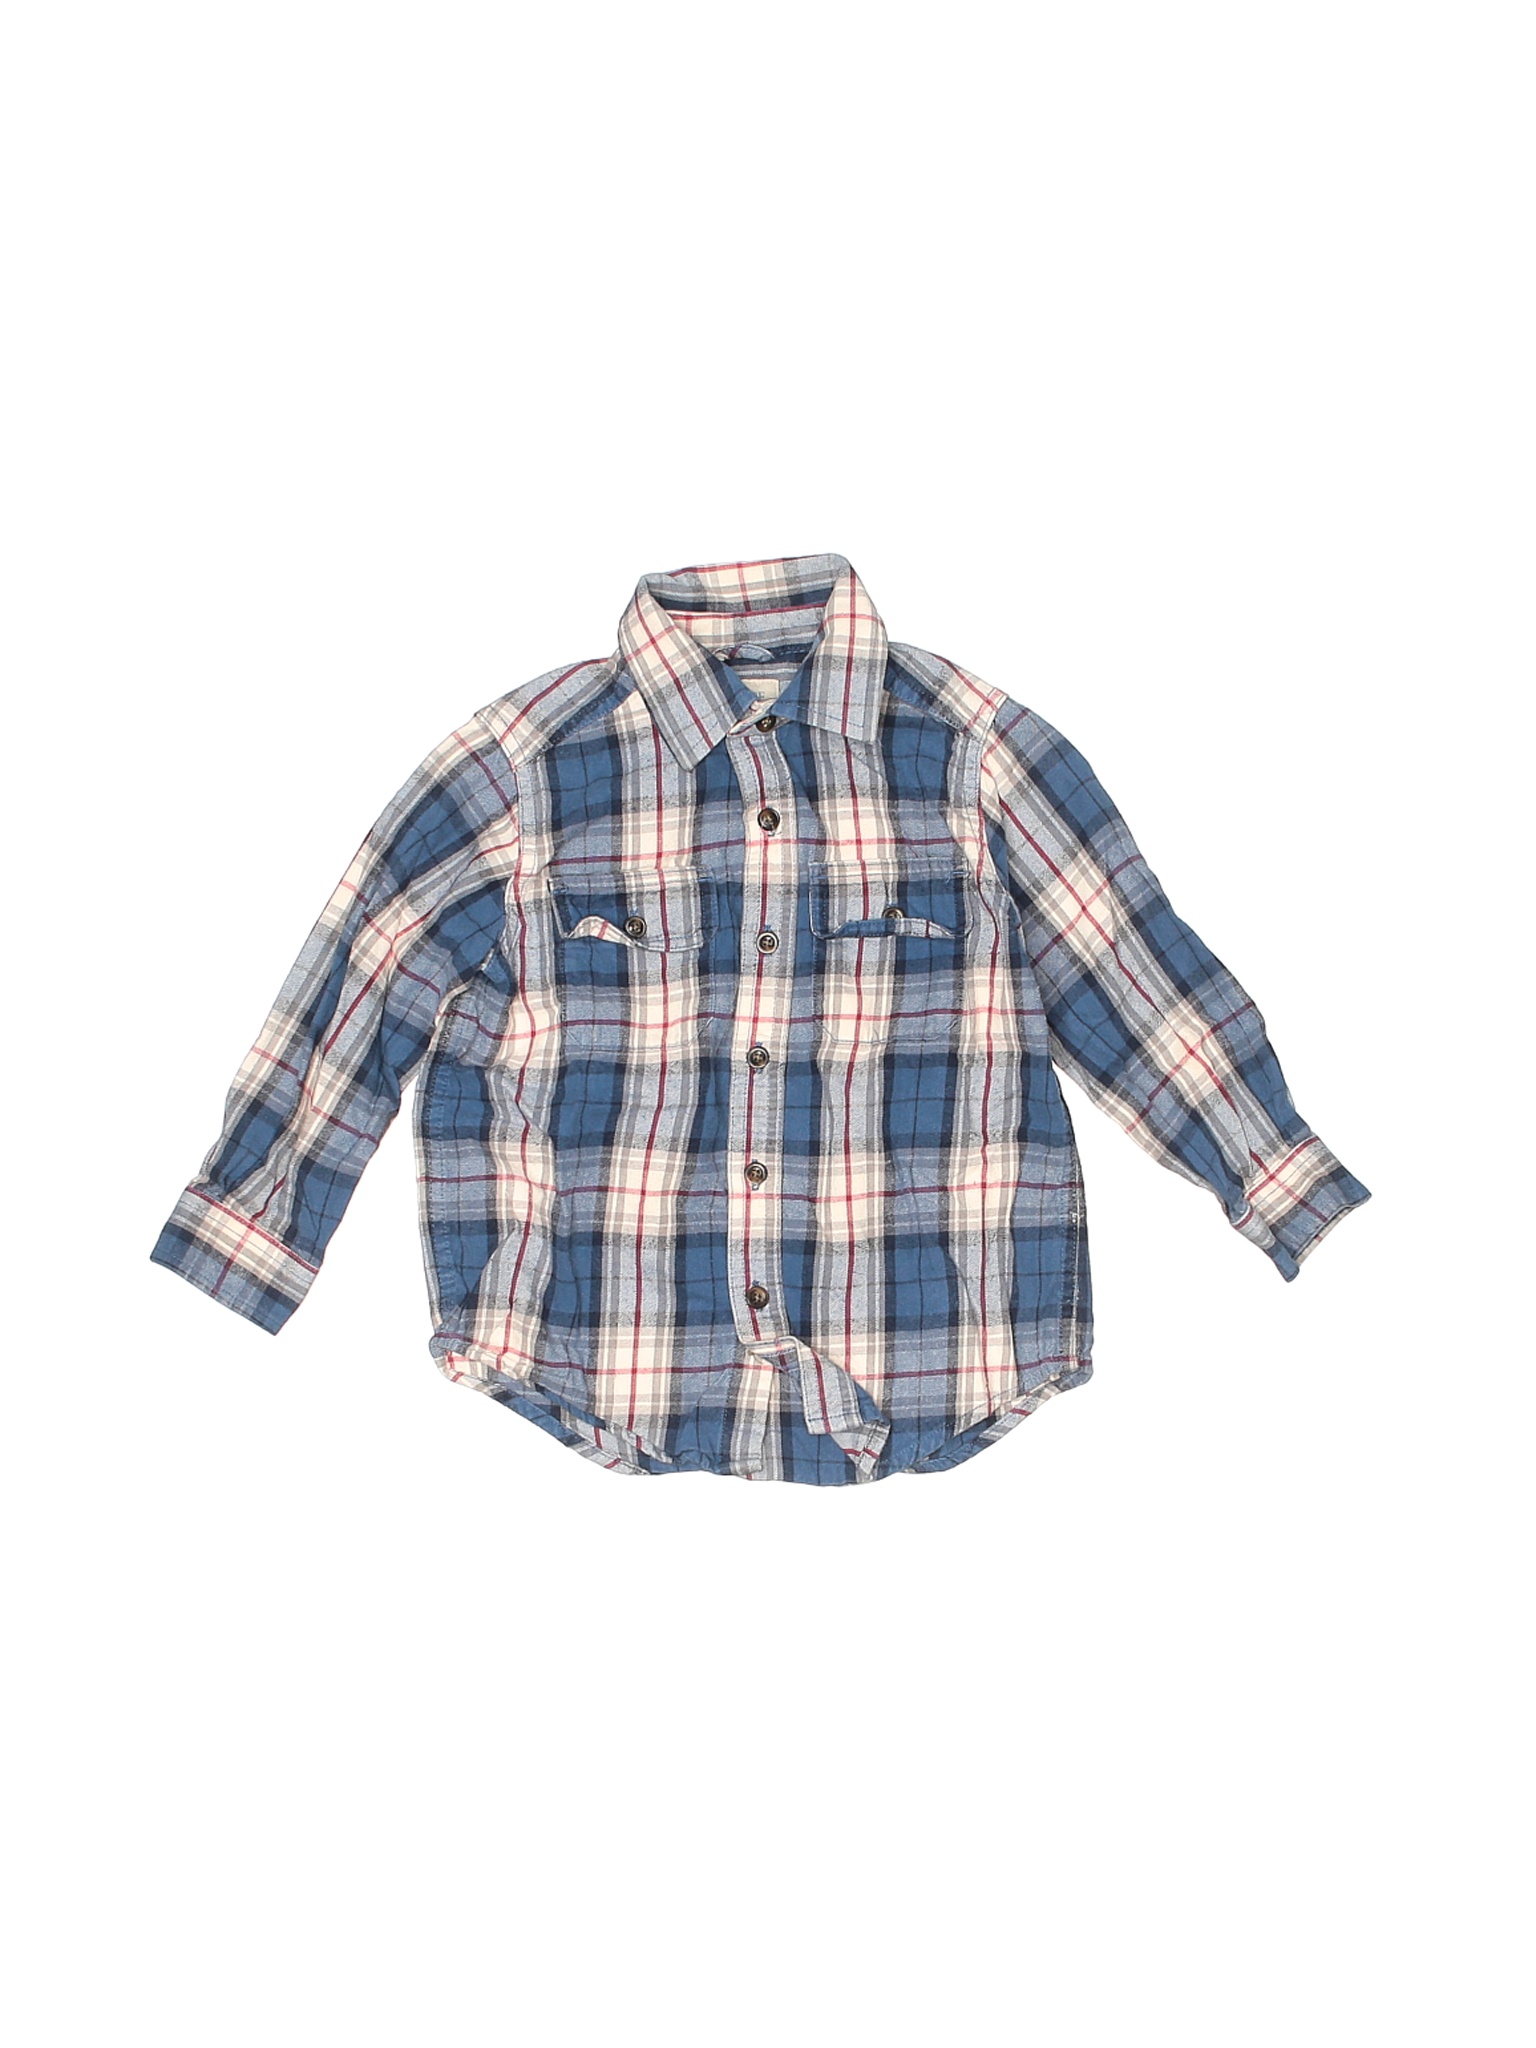 The Children's Place Boys Blue Long Sleeve Button-Down Shirt 4T | eBay